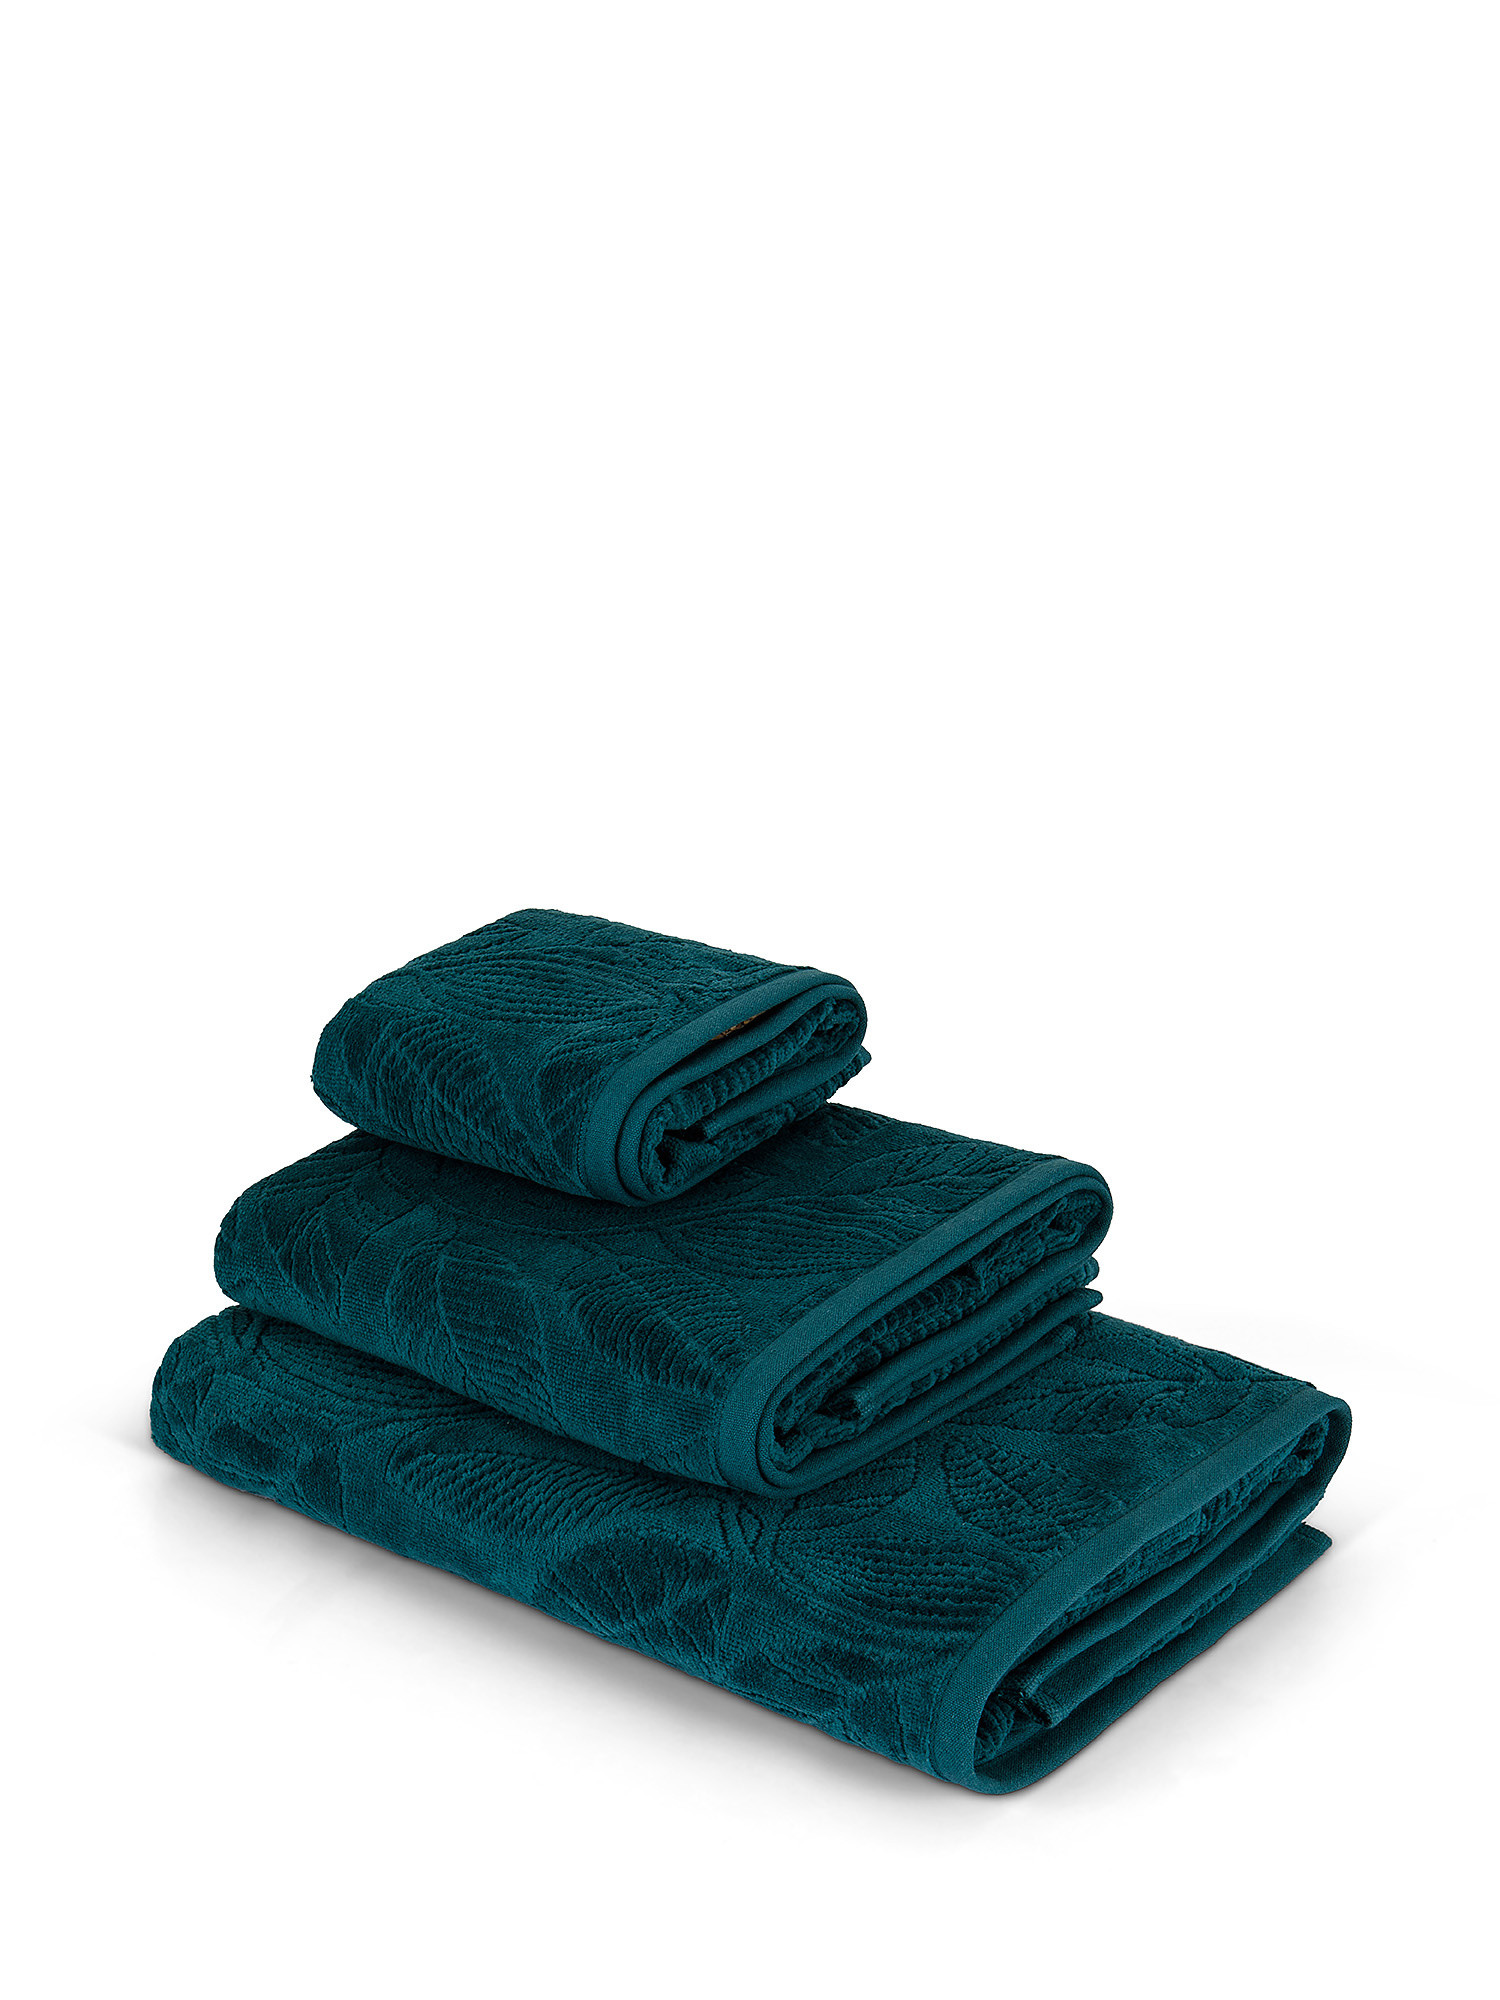 Cotton velor towel with flower motif, Green, large image number 0